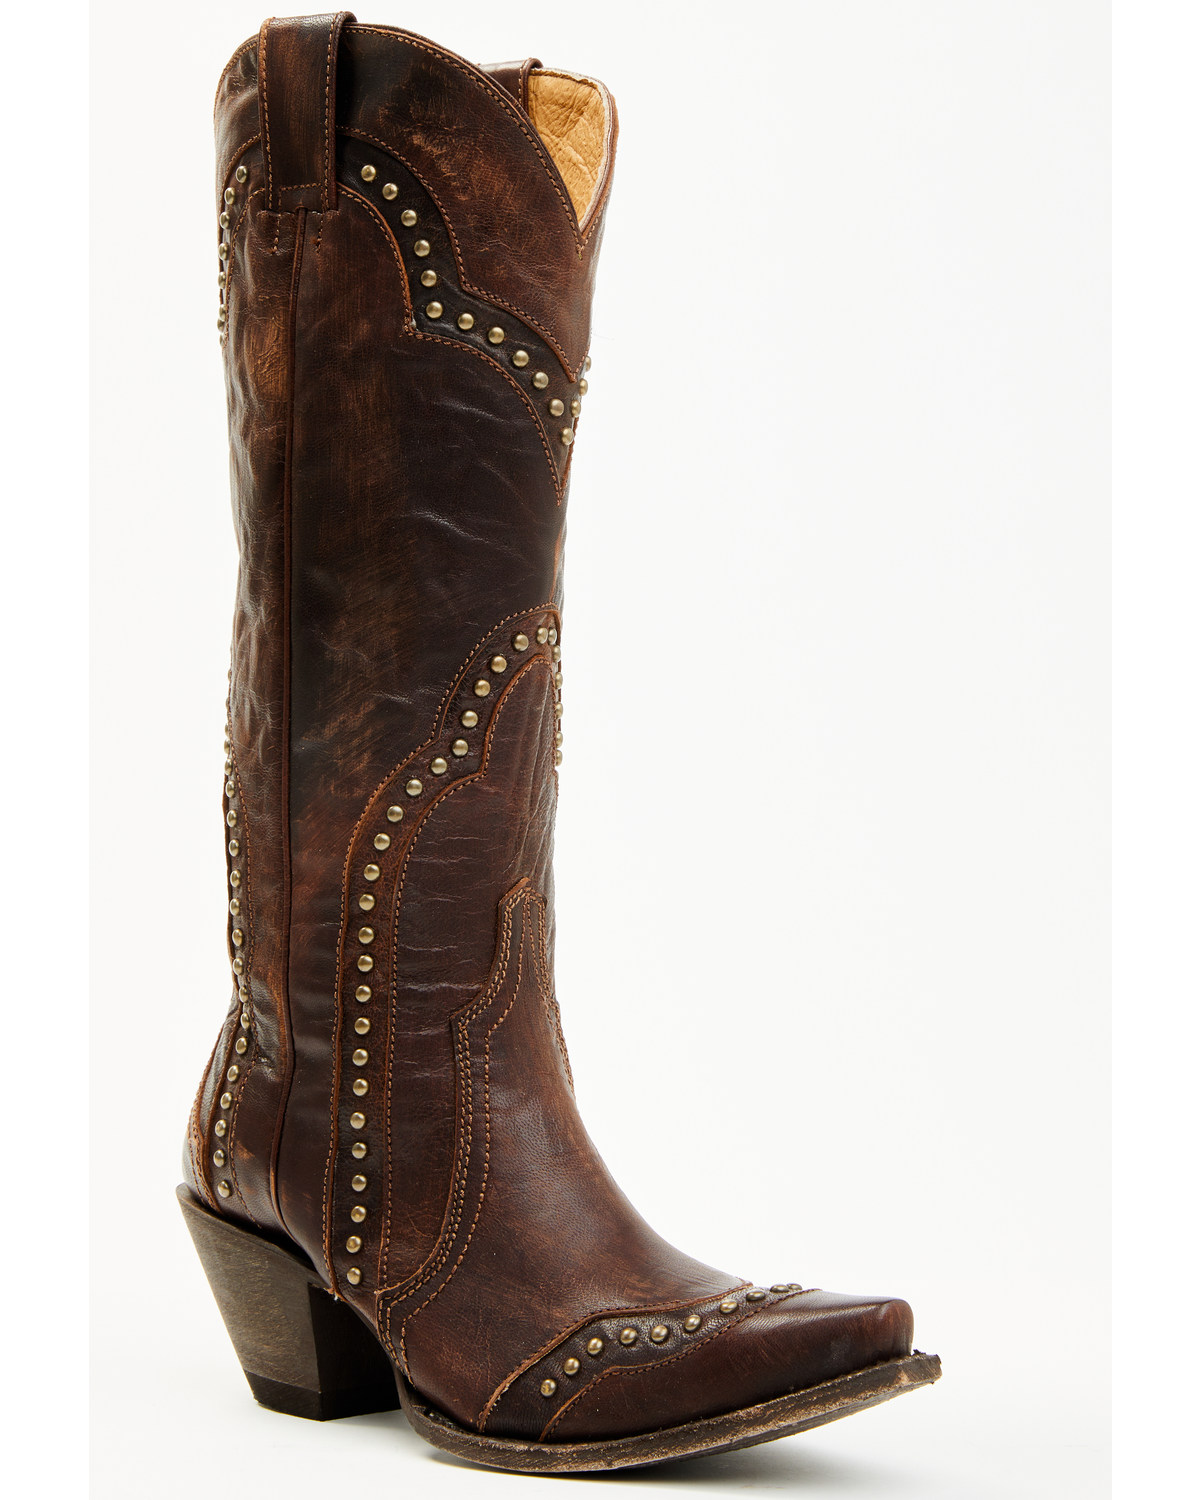 Idyllwind Women's Rite-Away Brown Western Boots - Snip Toe